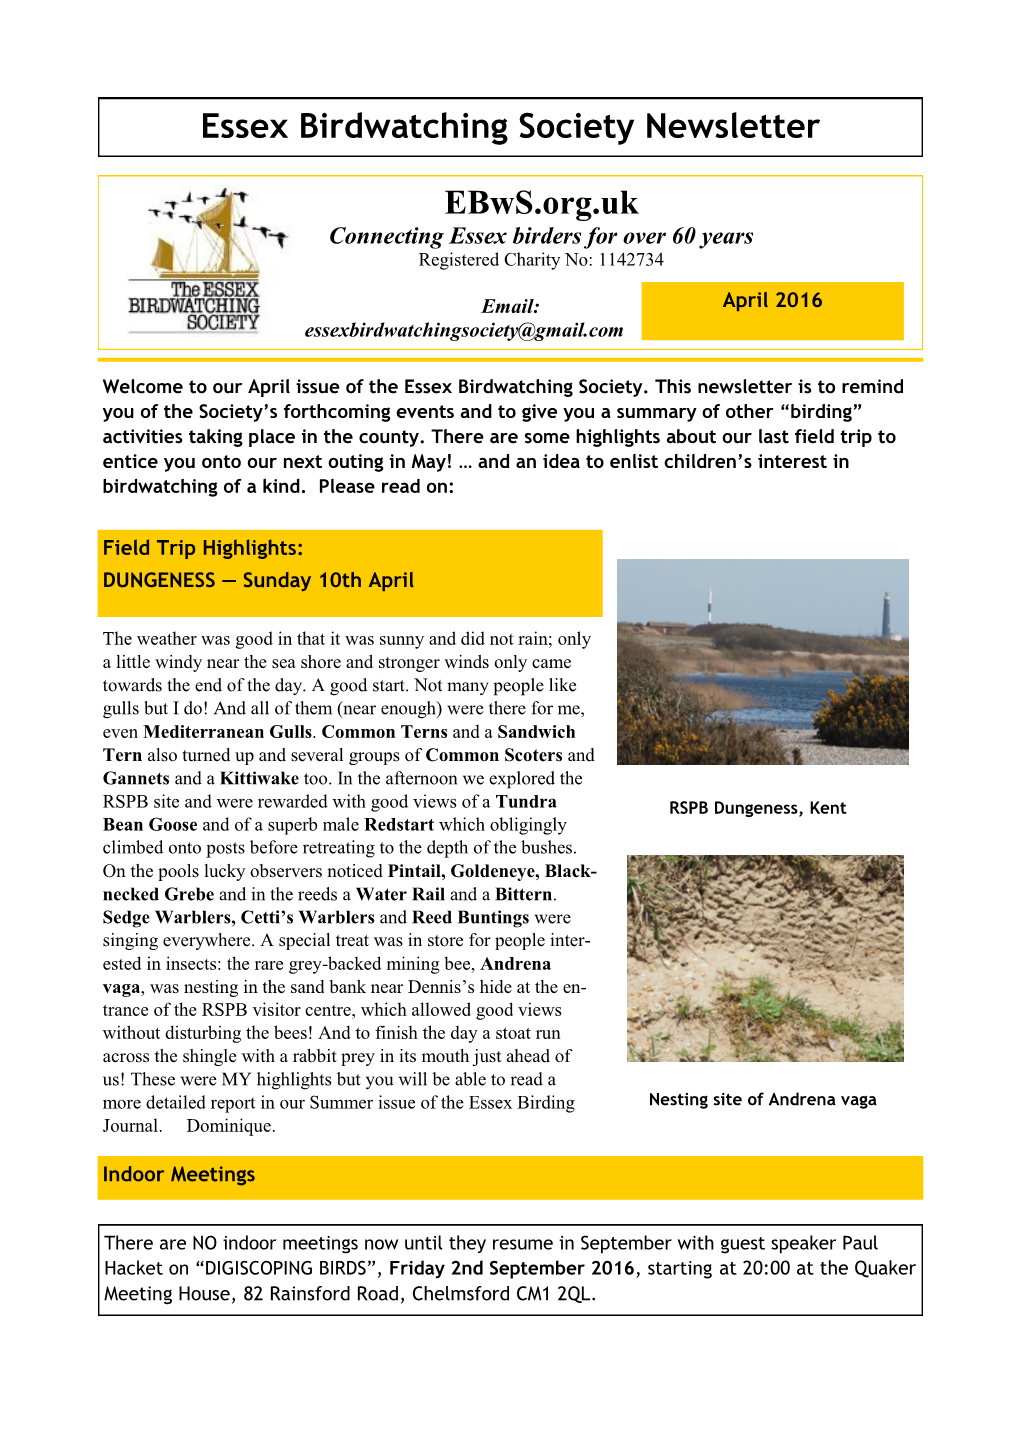 Essex Birdwatching Society Newsletter Ebws.Org.Uk